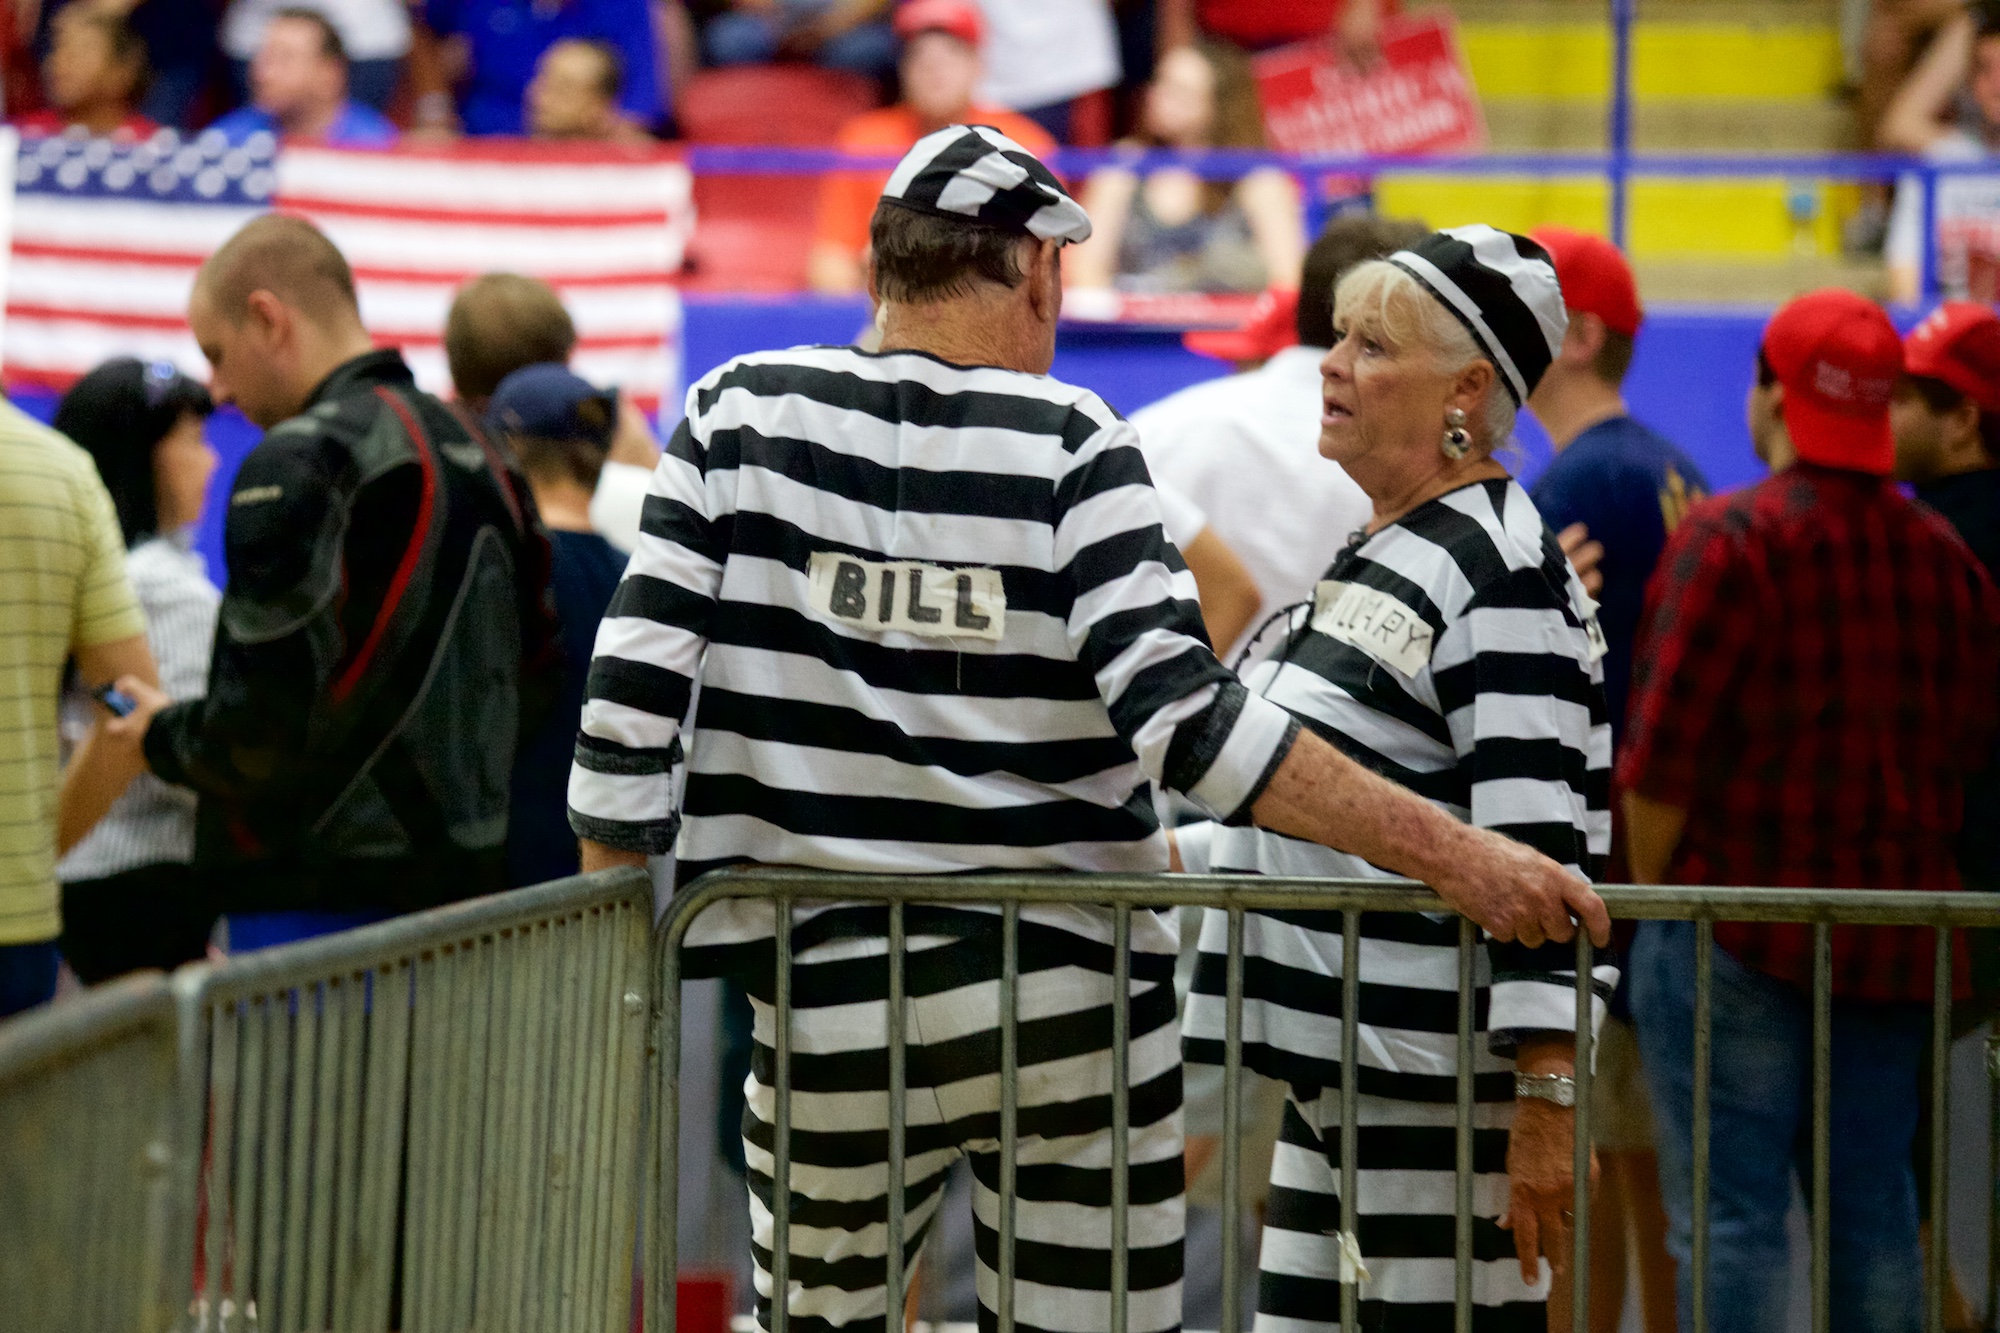 "Bill" and "Hillary" prisoner costumes